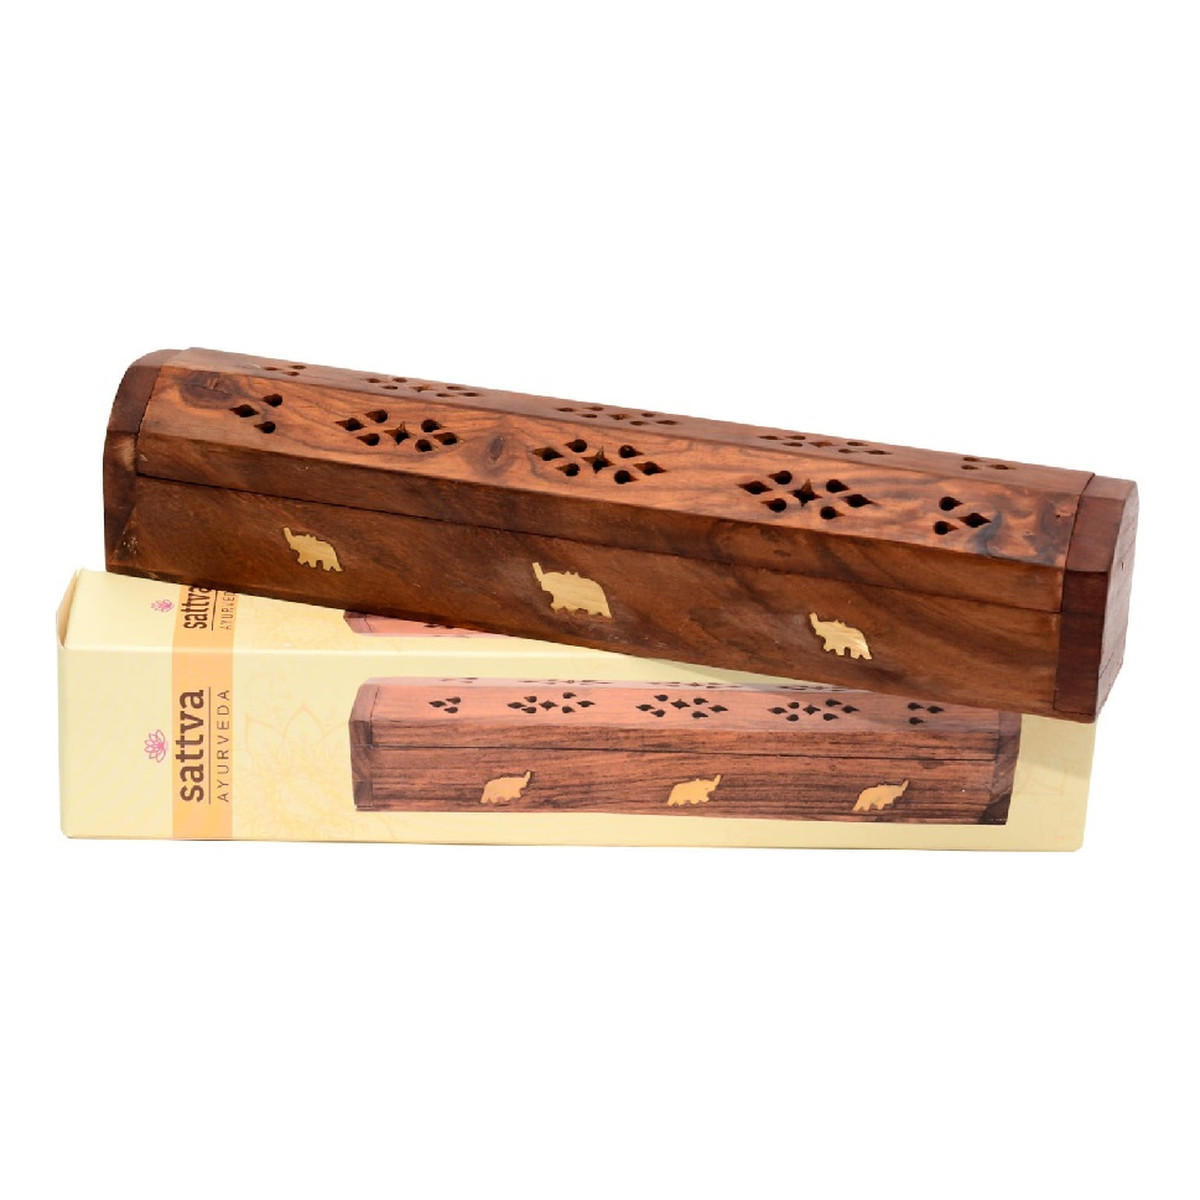 Sattva Incence wooden box drewniana podstawka na kadzidełka elephant